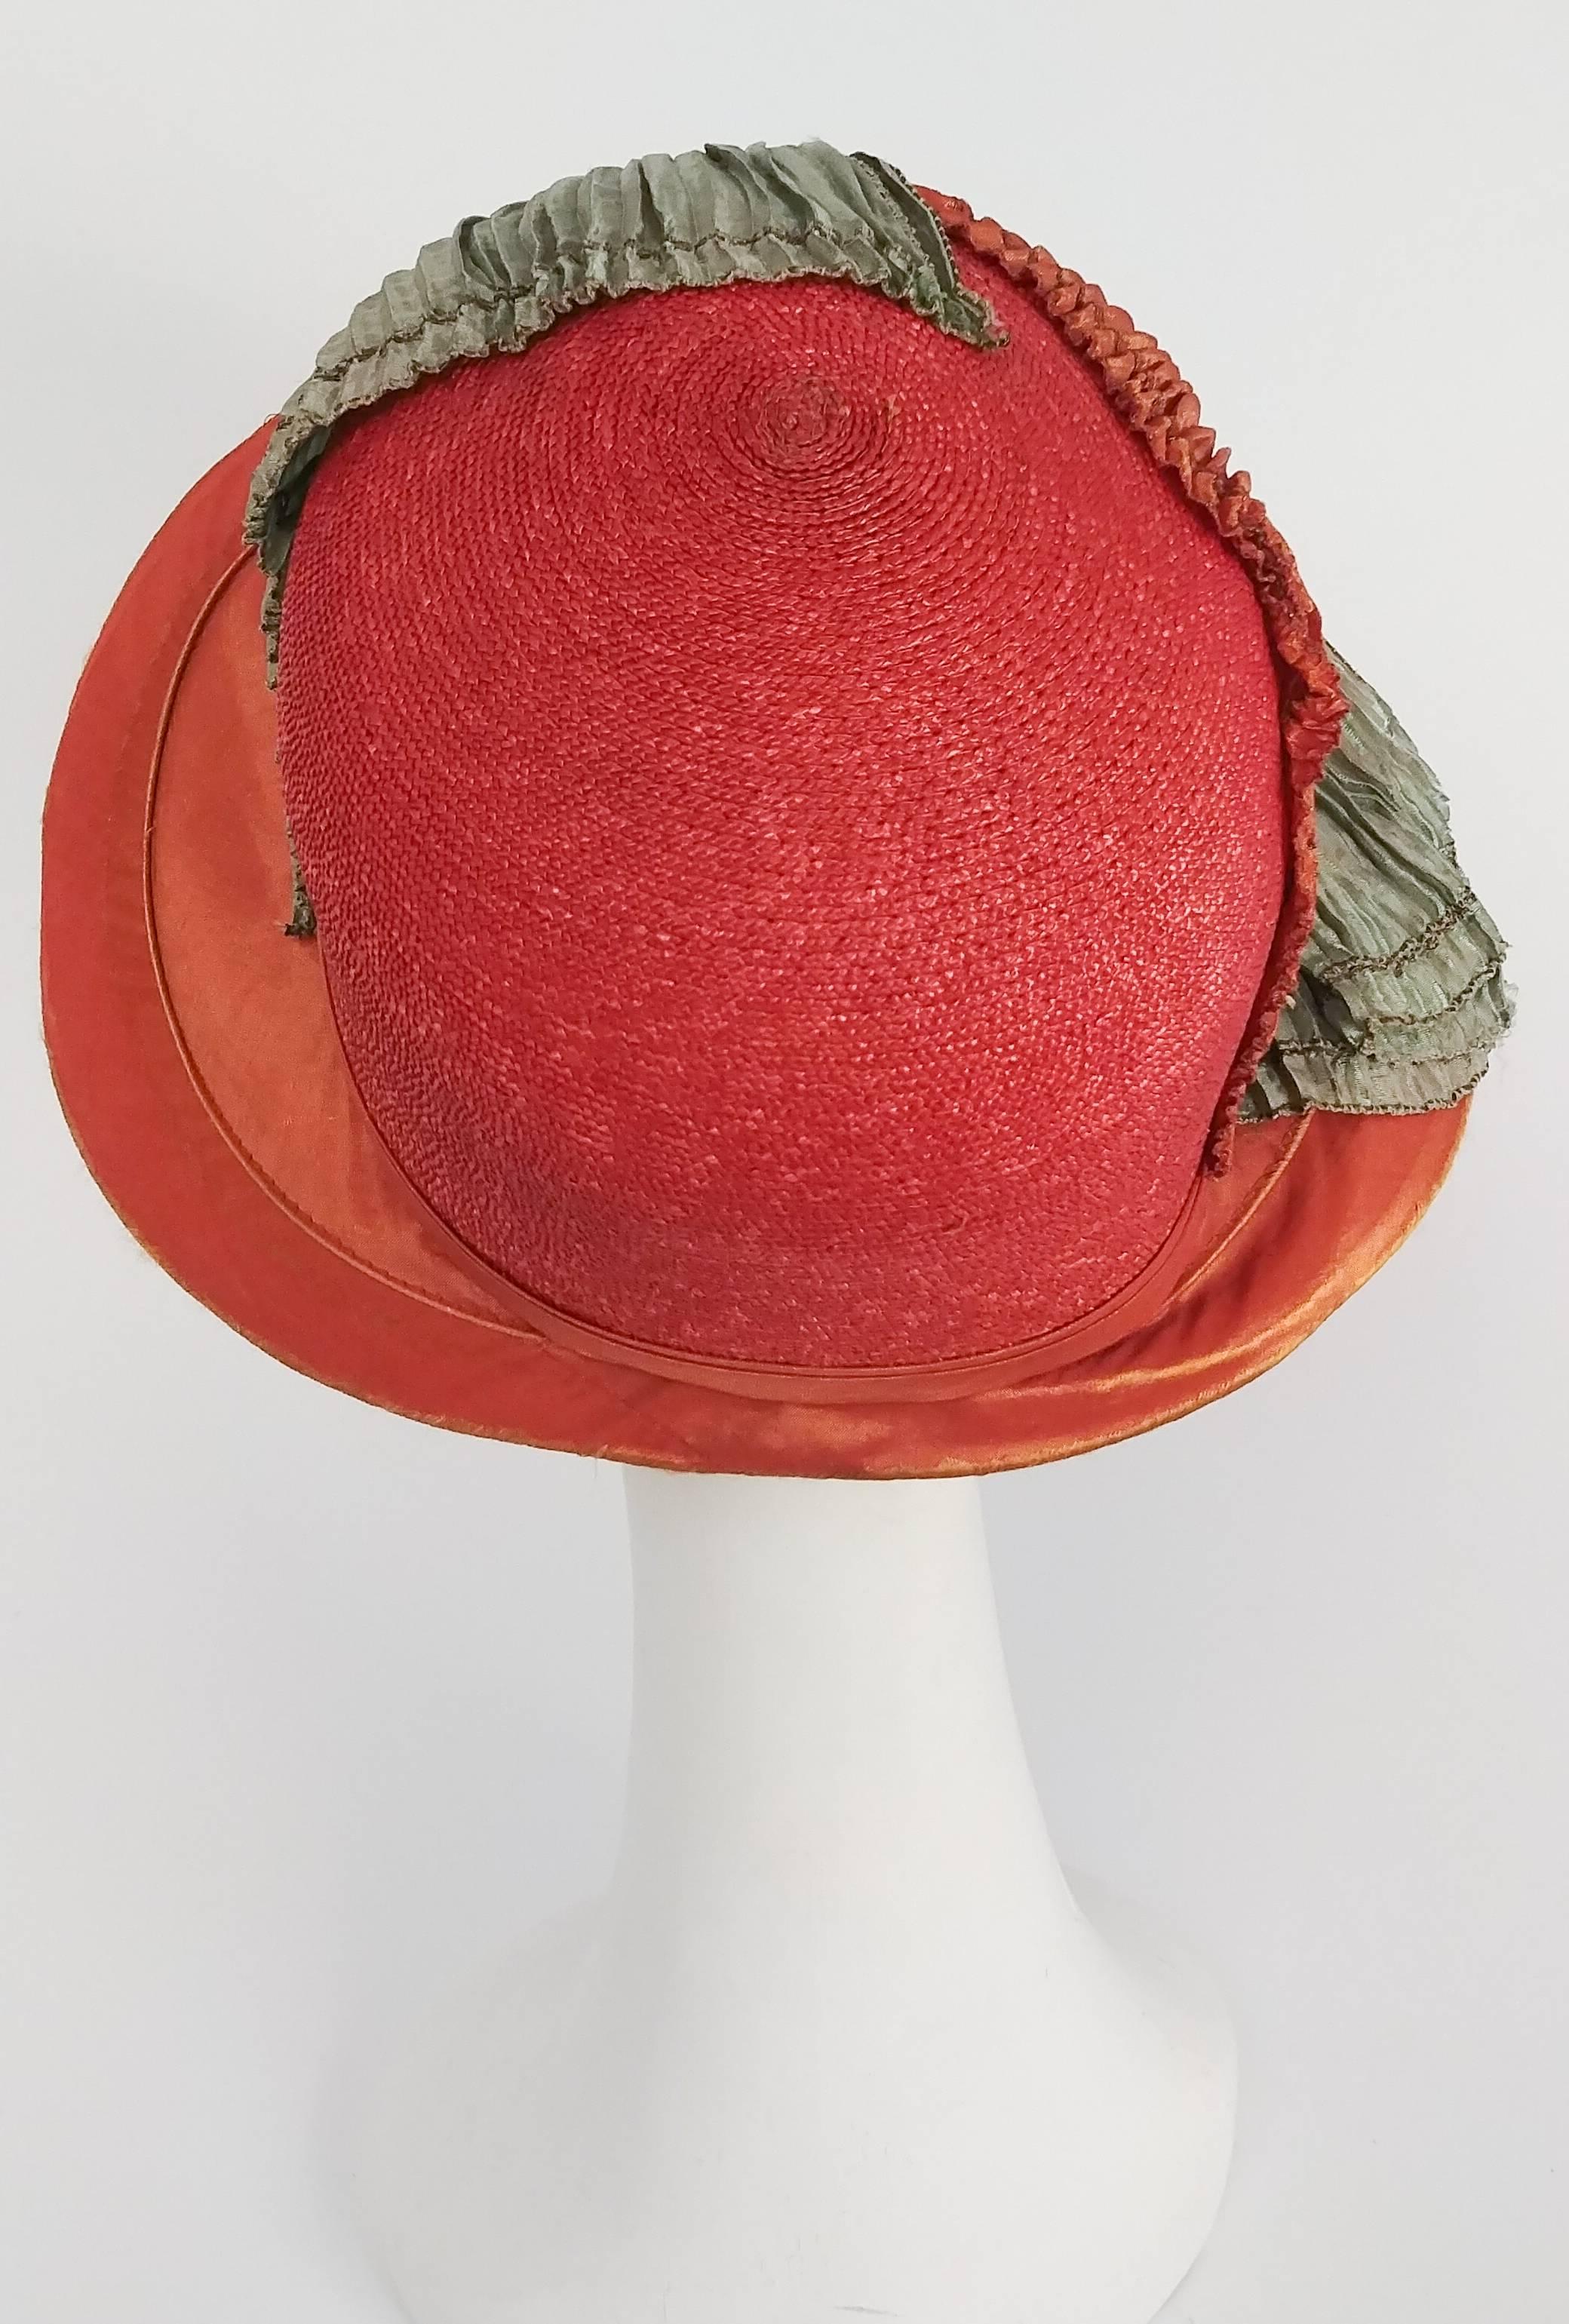 Women's 1920s Burnt Orange & Seafoam Green Wide Brim Cloche Hat